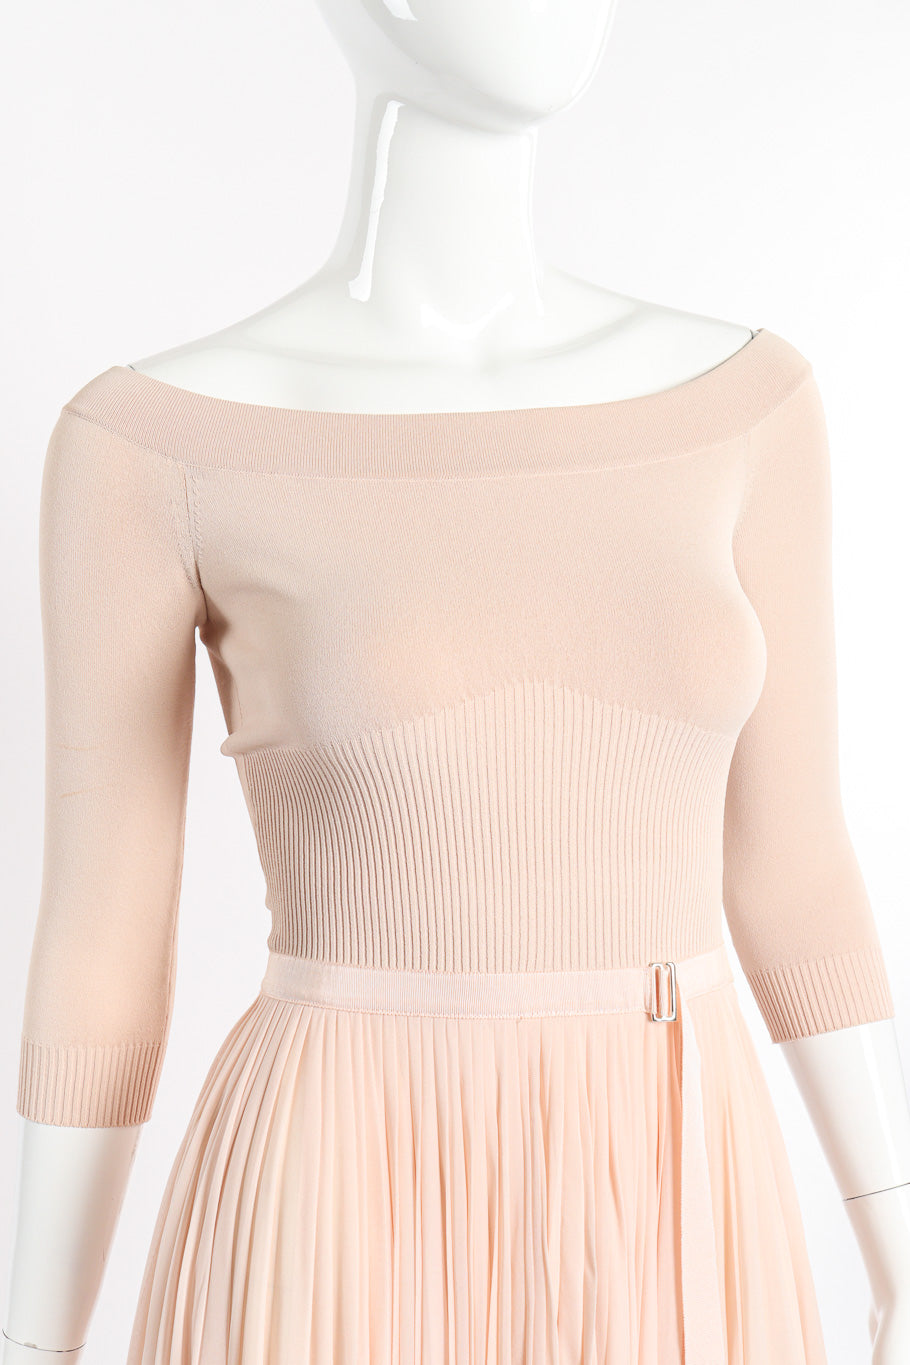 Alexander McQueen Off-The-Shoulder Pleated Knit Dress front view on mannequin closeup @recessla